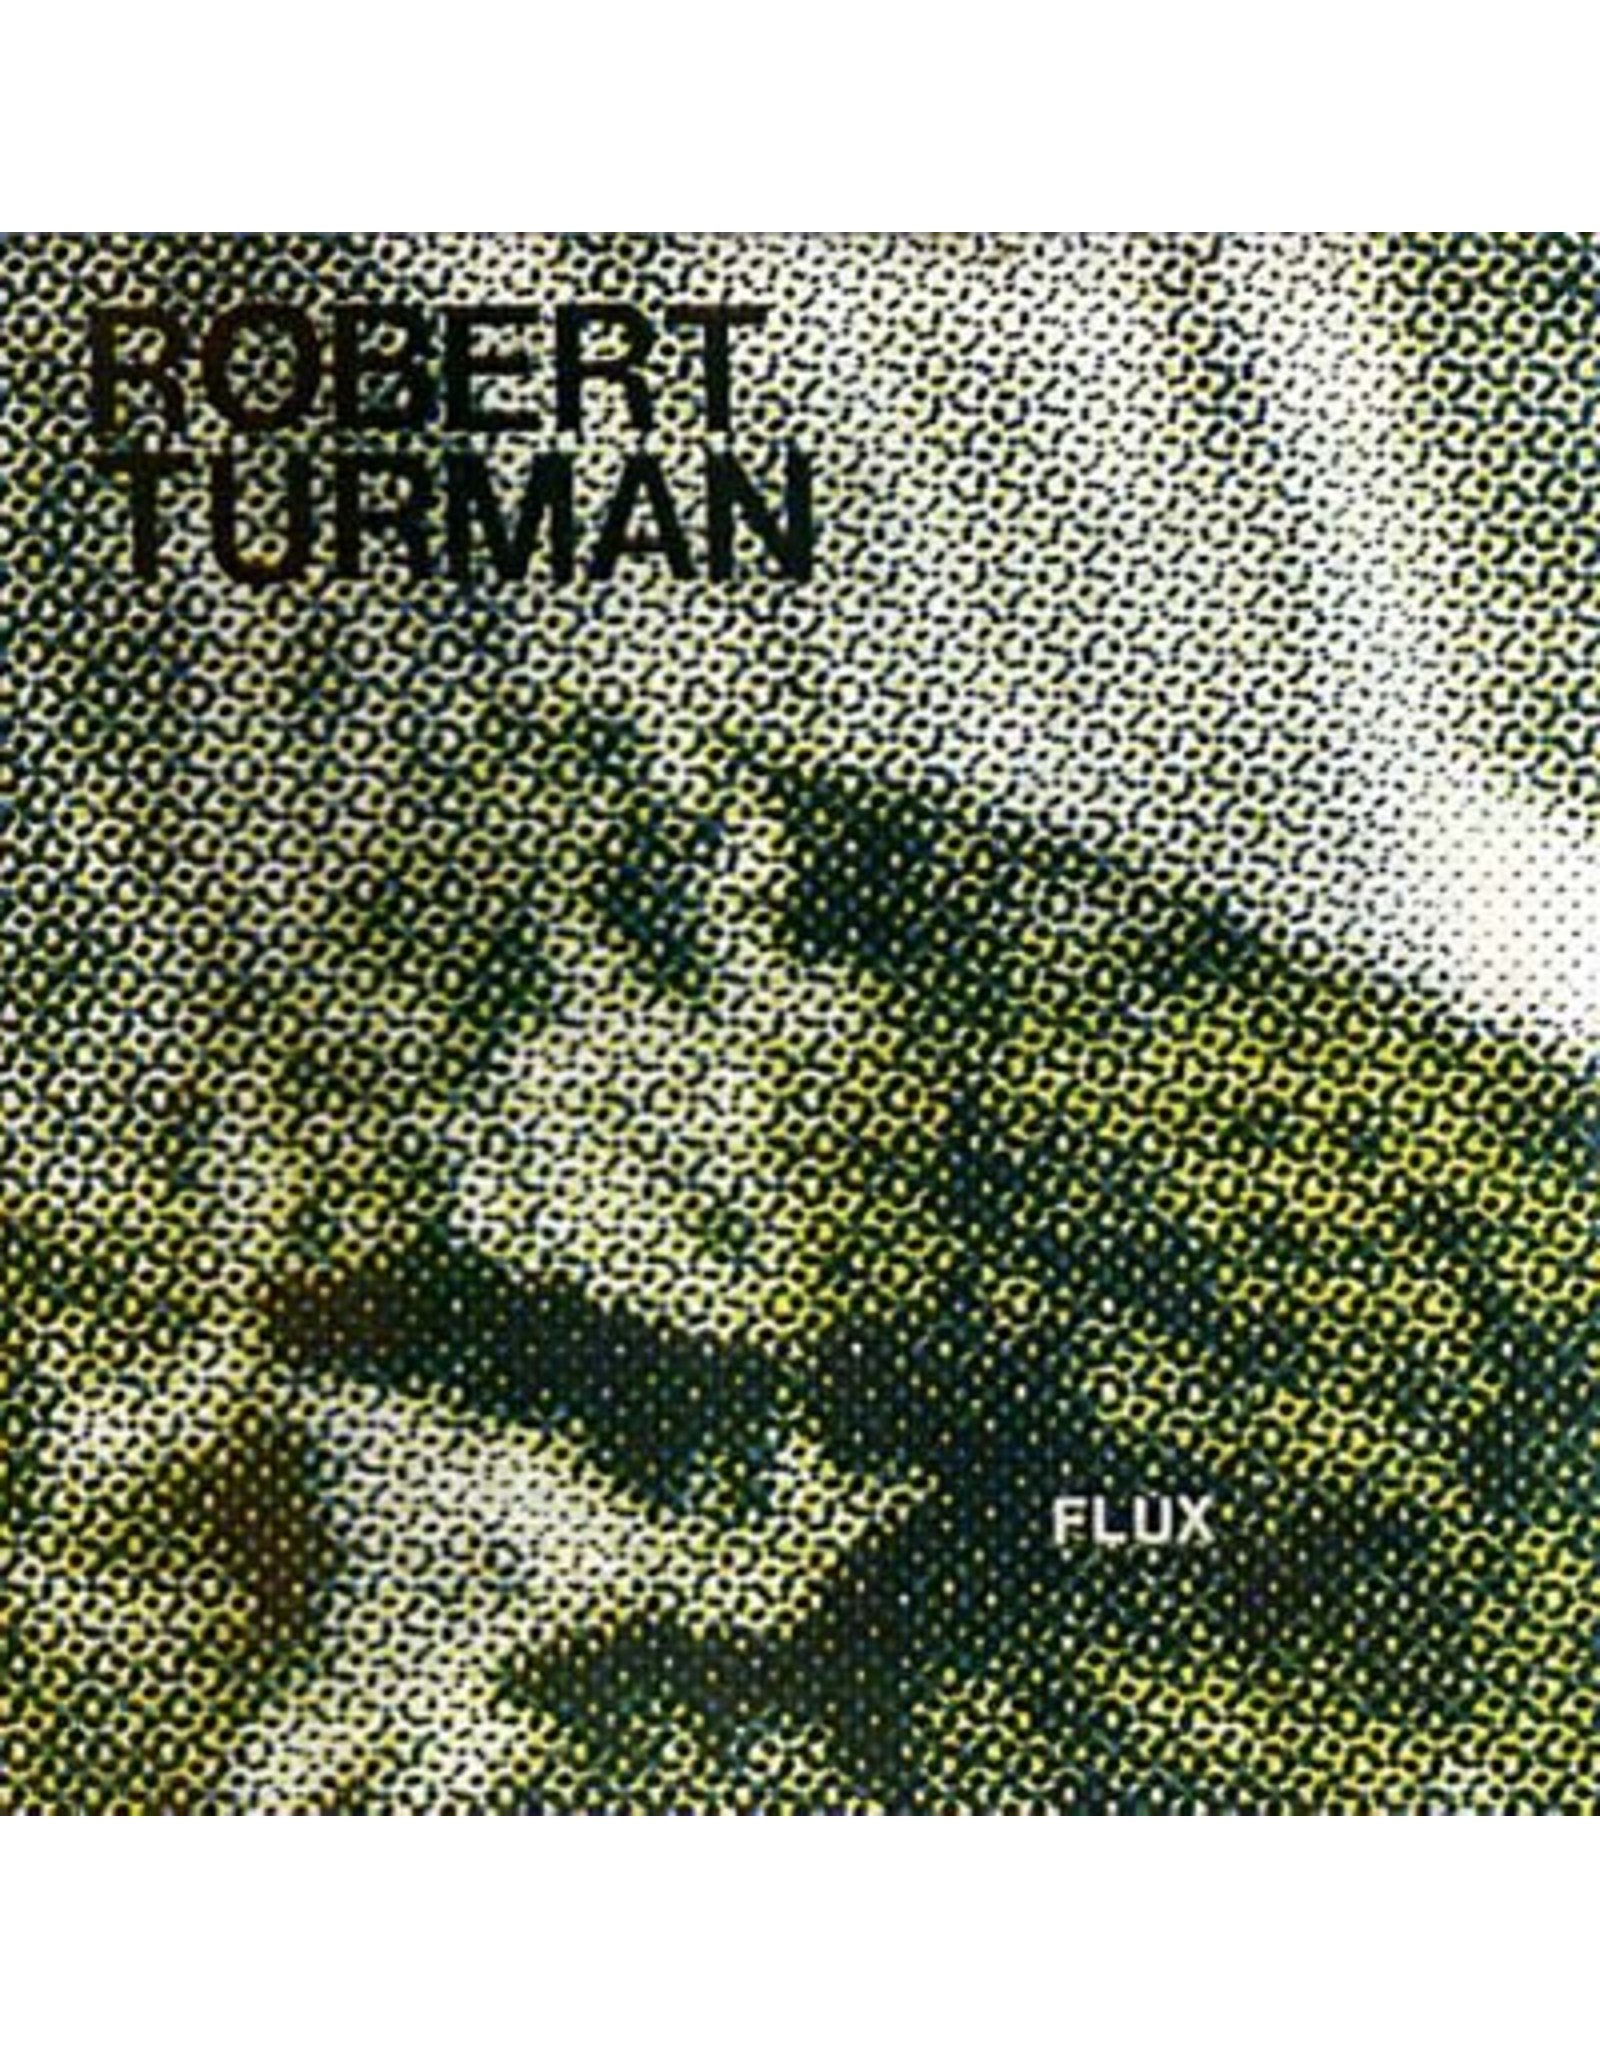 Spectrum Spools Turman, Robert: Flux LP